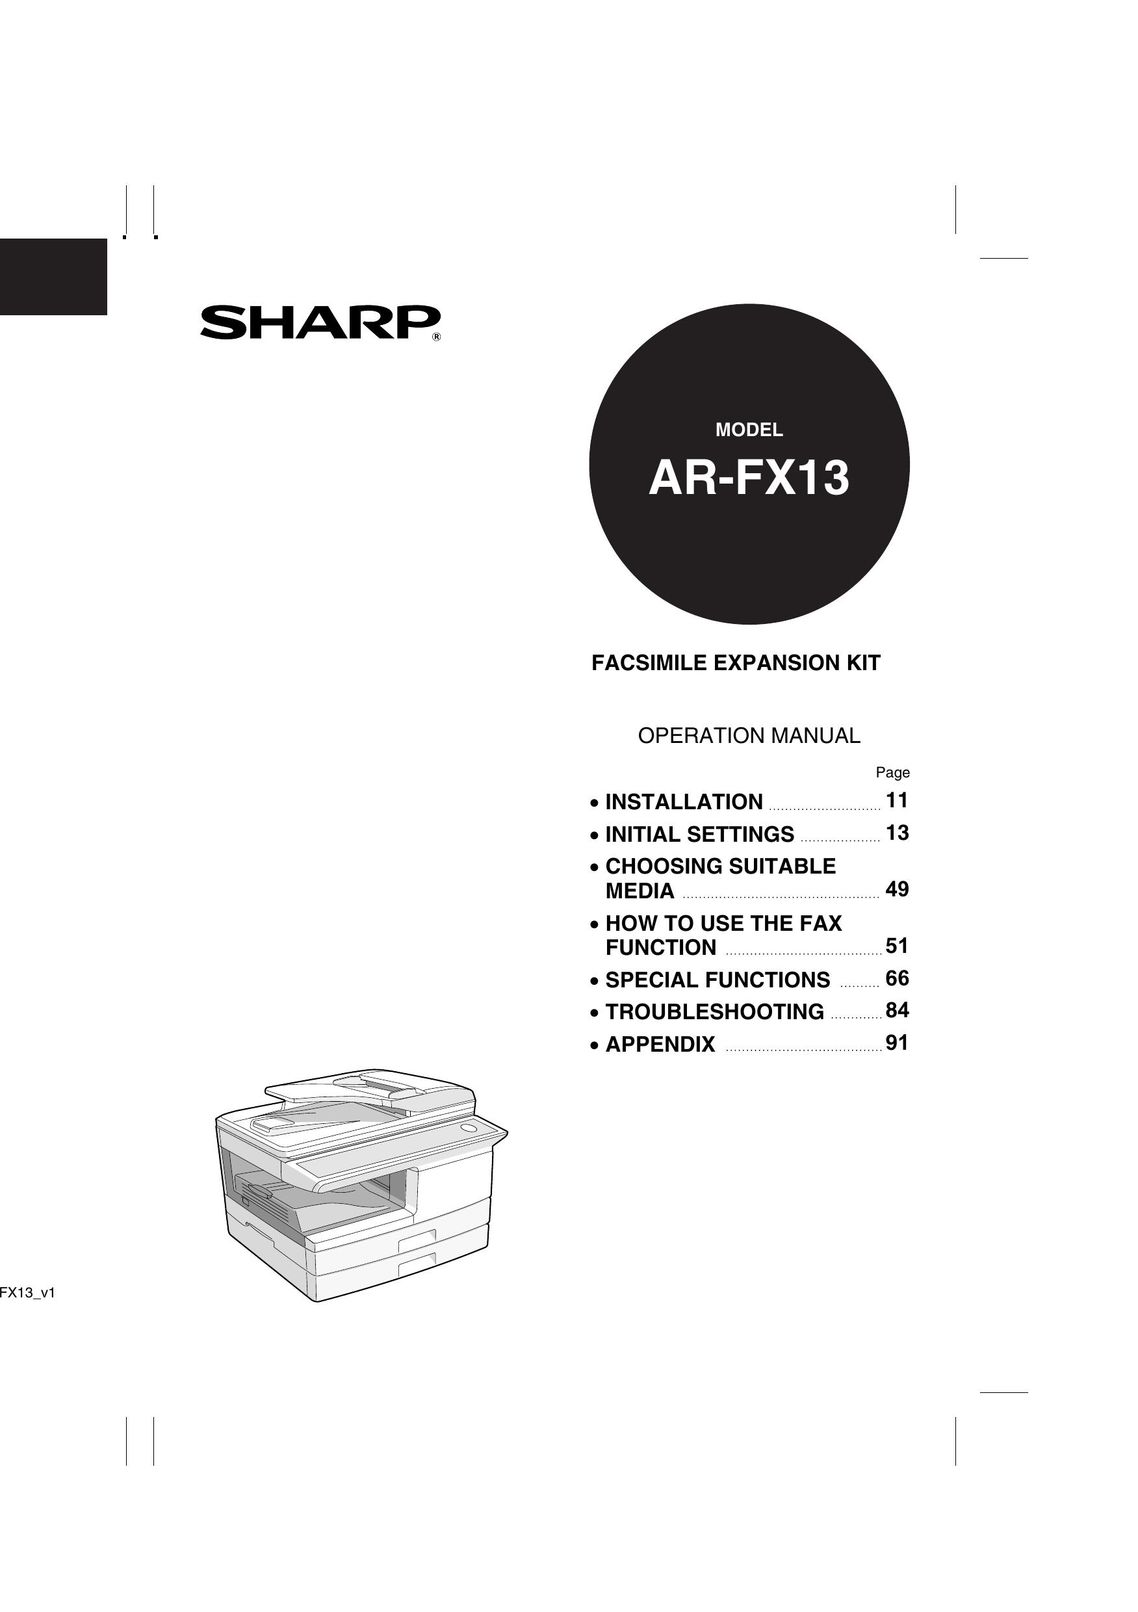 Sharp AR-FX13 Fax Machine User Manual